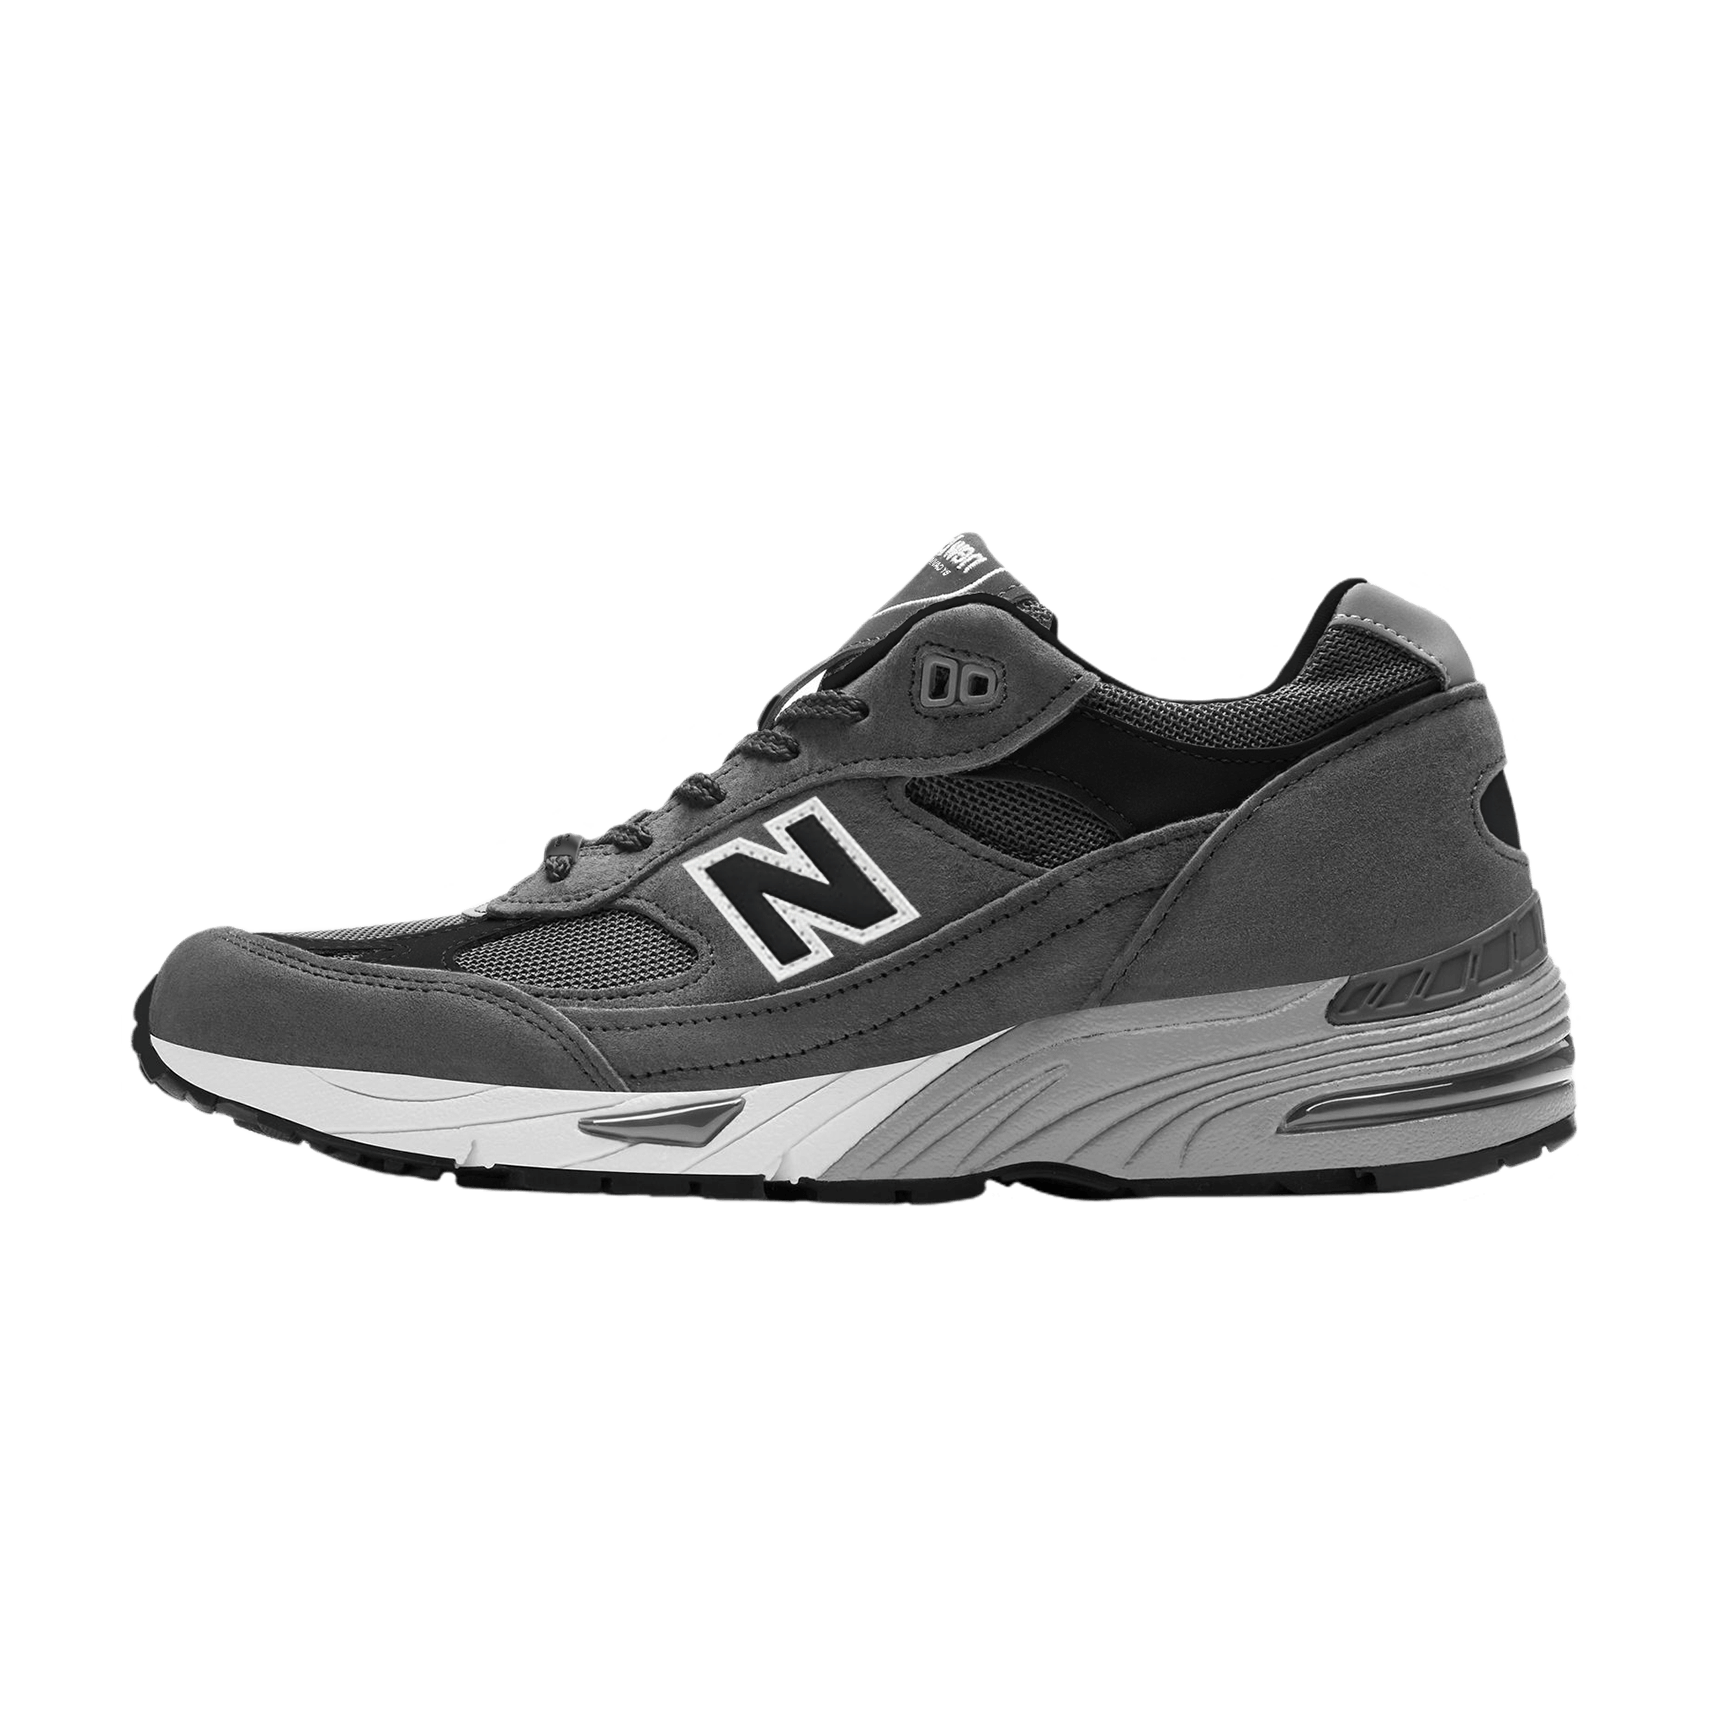 Sneakers :: New Balance 991 Jobs